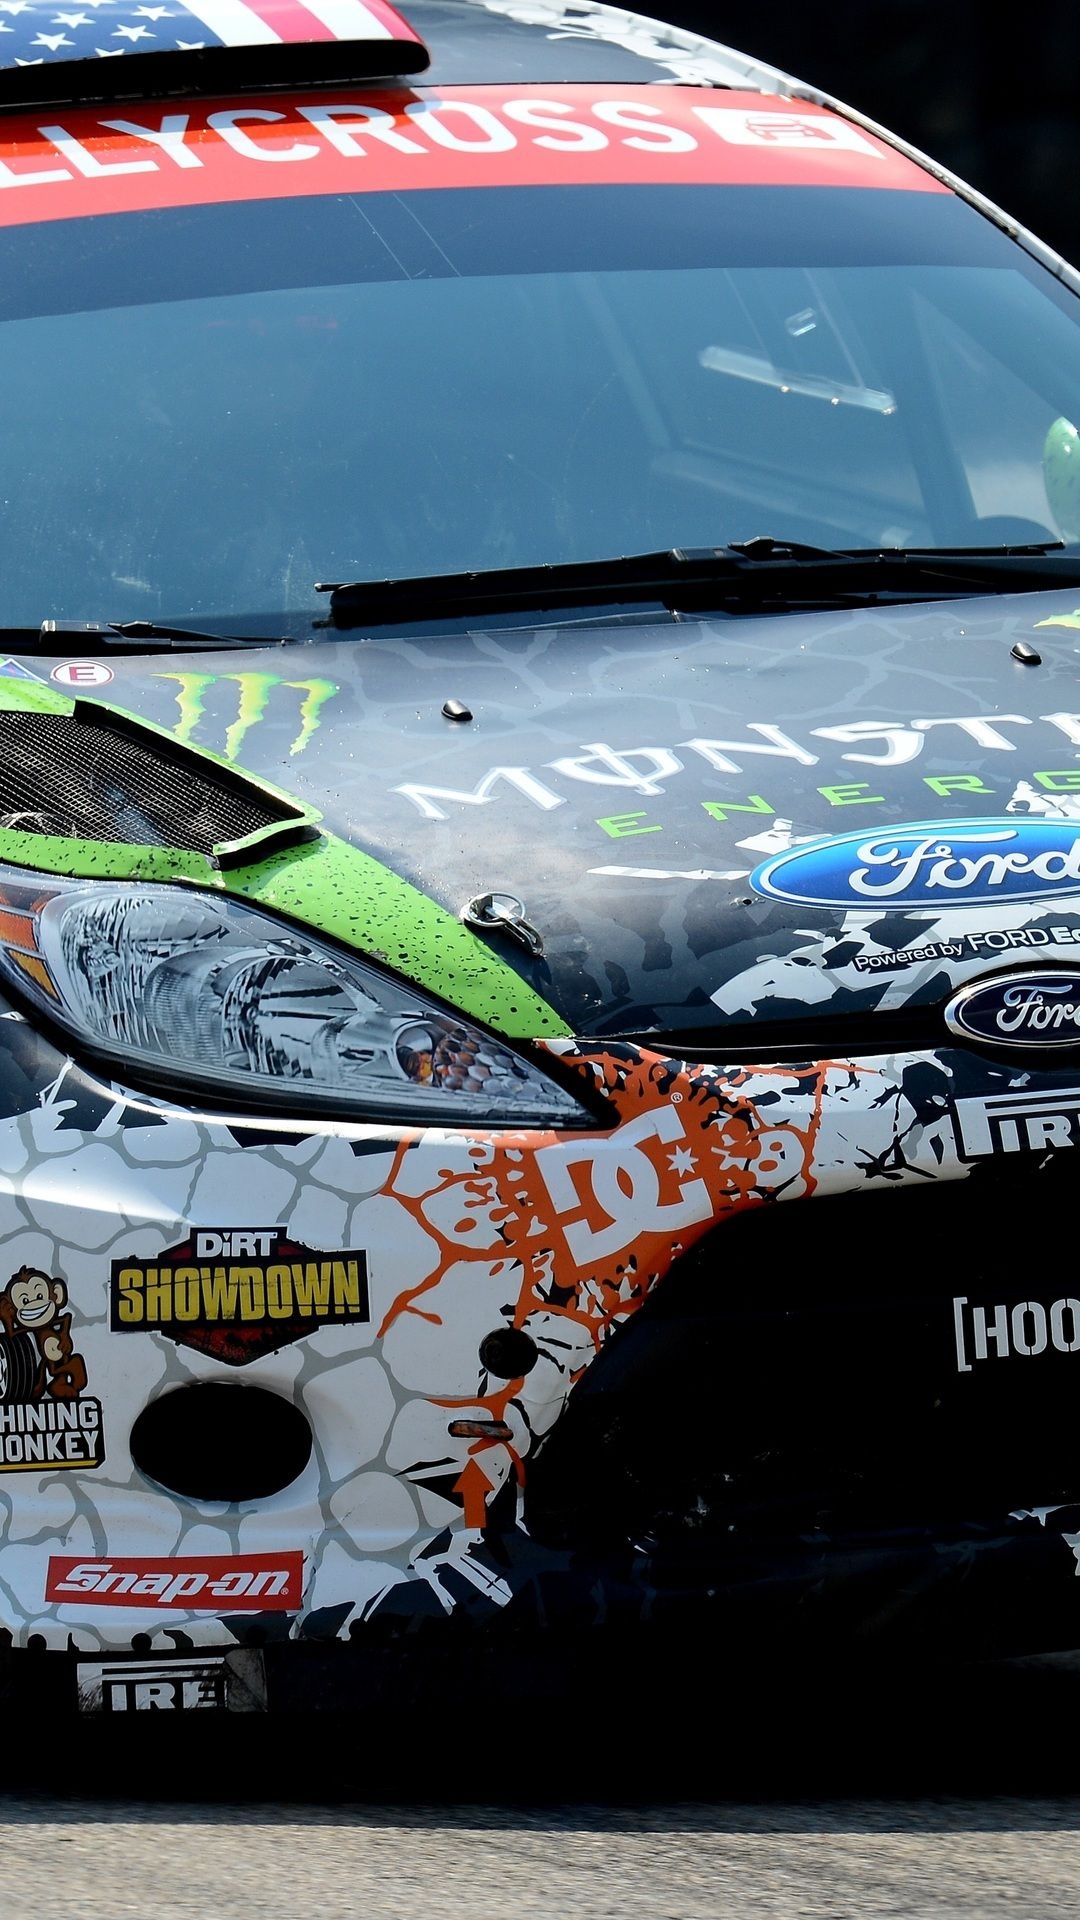 Rallycross: Automobile Exterior, Sponsor Logos, Ford Hoonigan, Dirt Showdown. 1080x1920 Full HD Background.